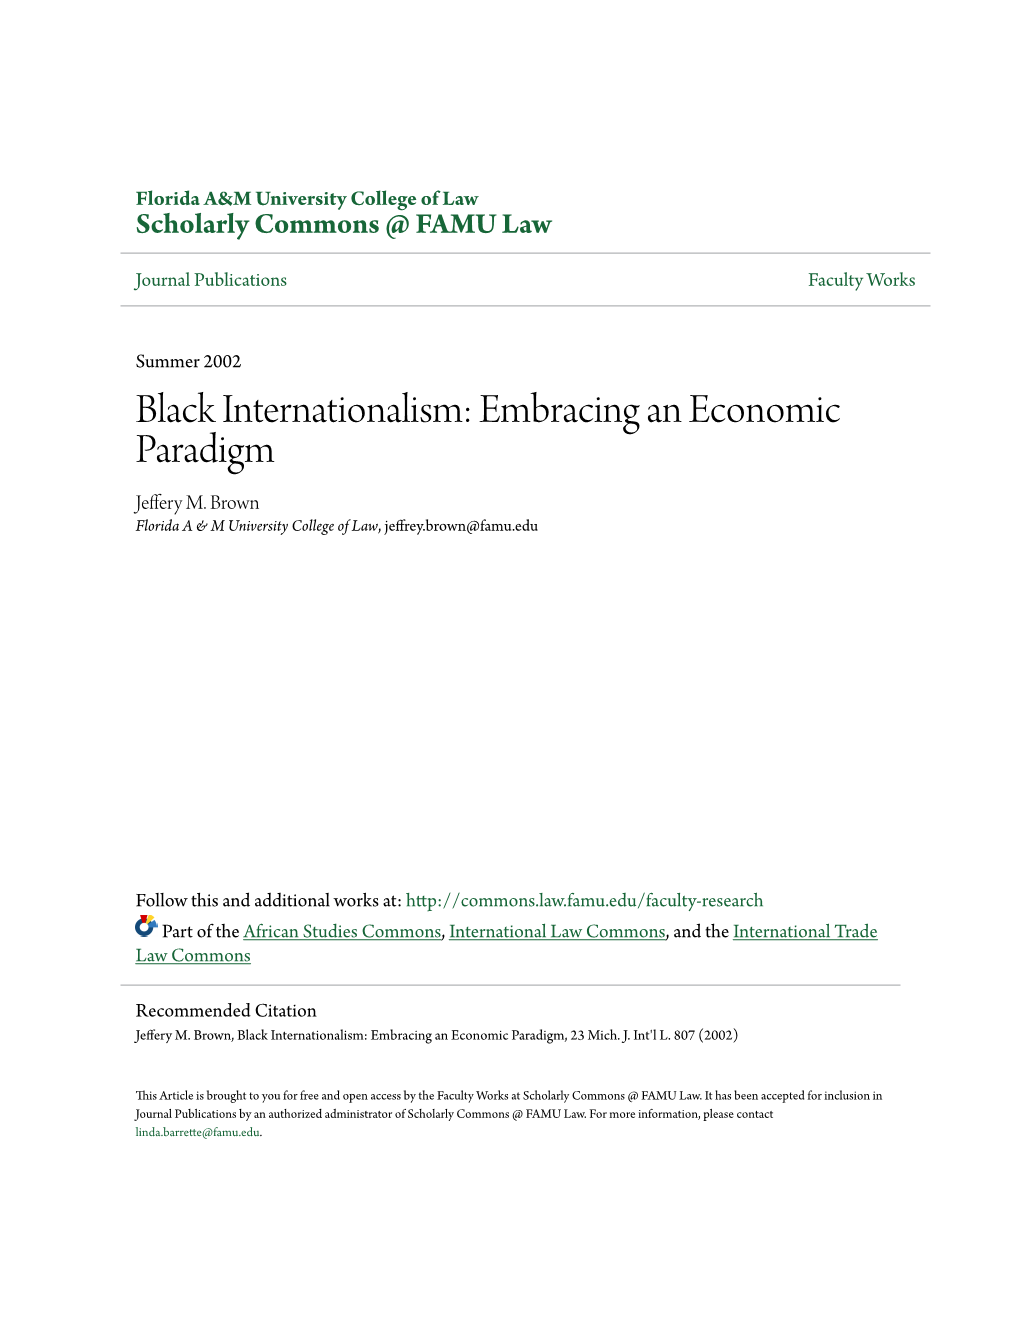 Black Internationalism: Embracing an Economic Paradigm Jeffery M